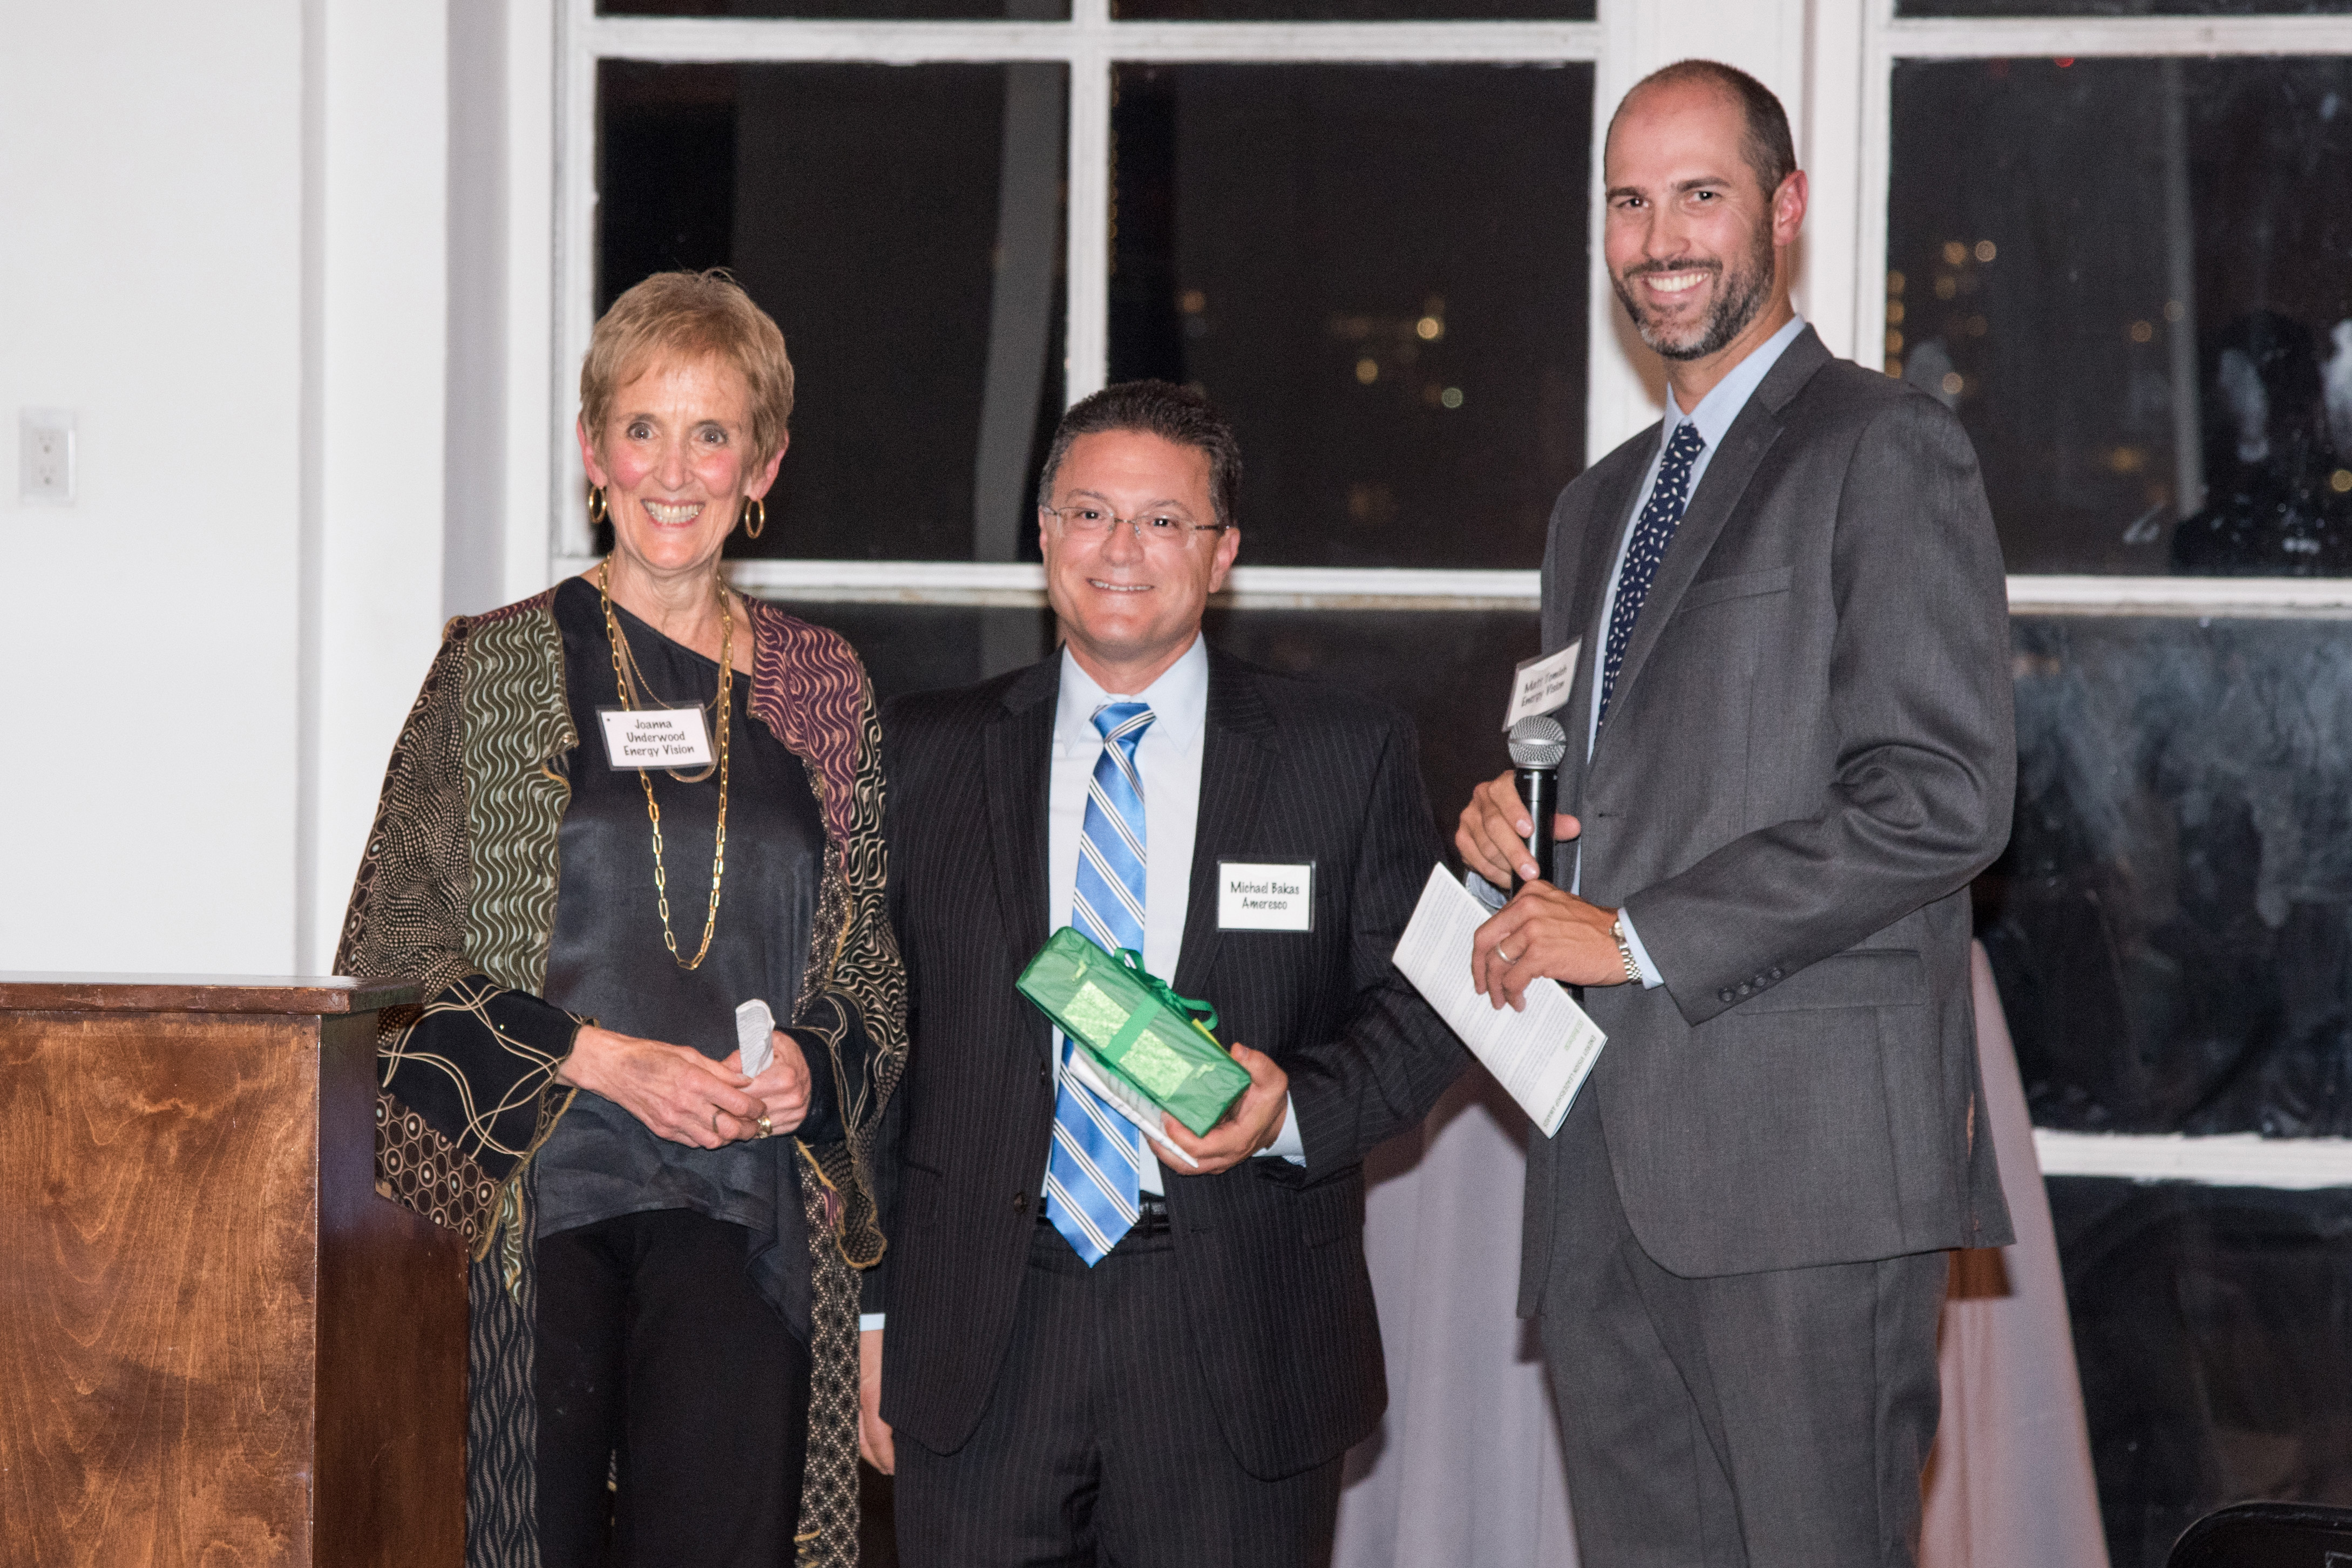 Michael T. Bakas of Ameresco receives a 2017 Energy Vision award